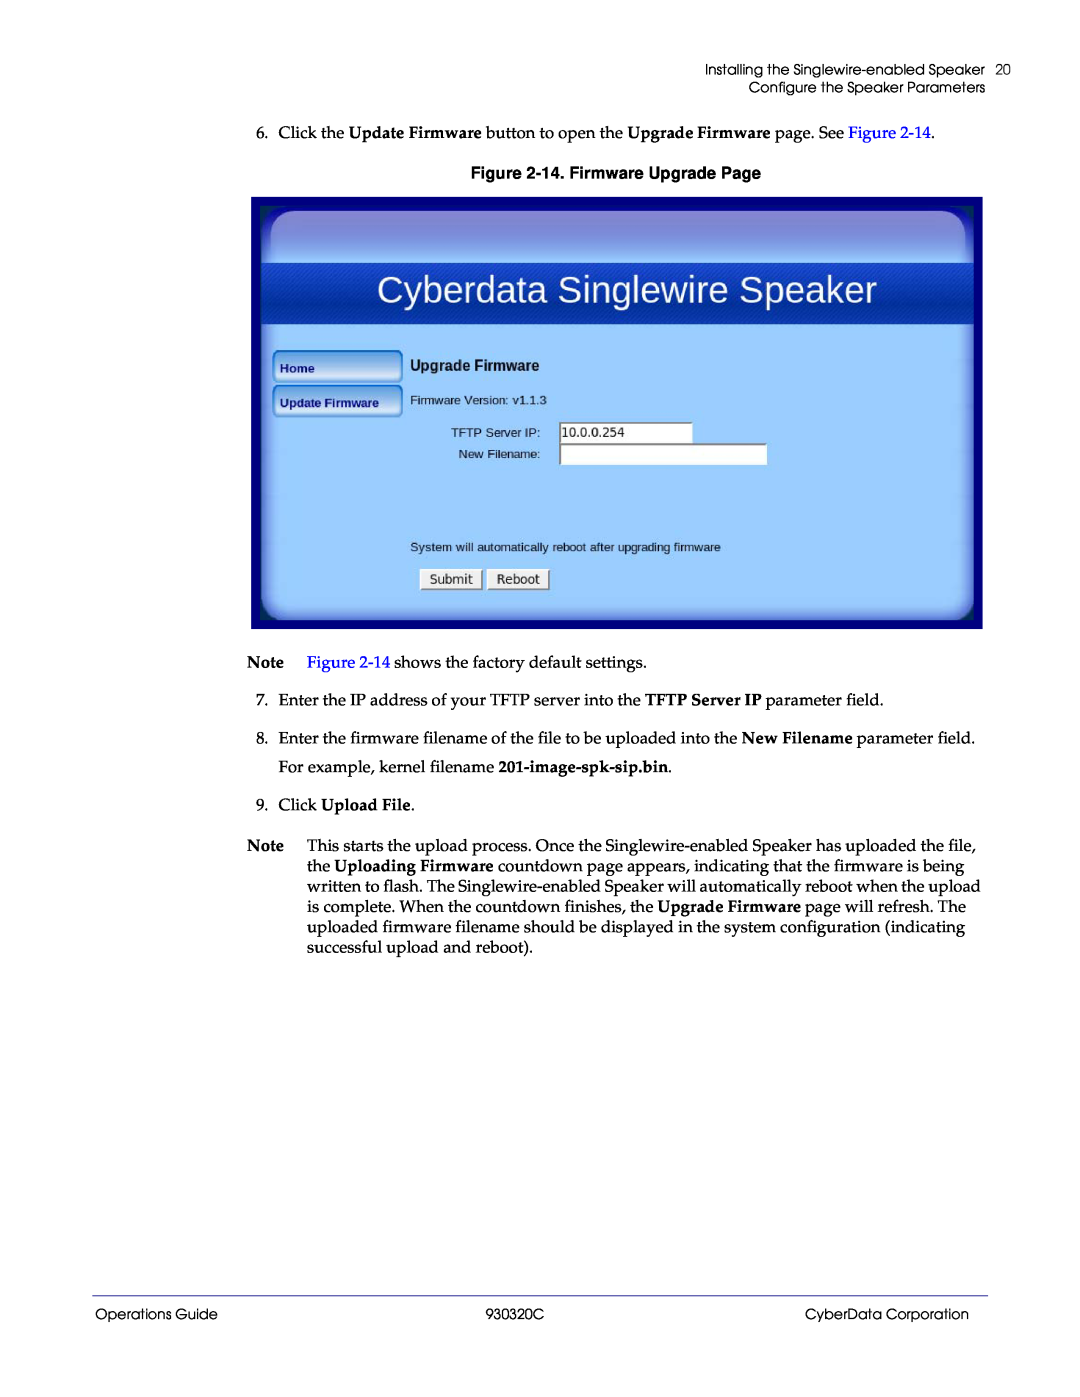 CyberData 11103 manual 14.Firmware Upgrade Page, Click Upload File 